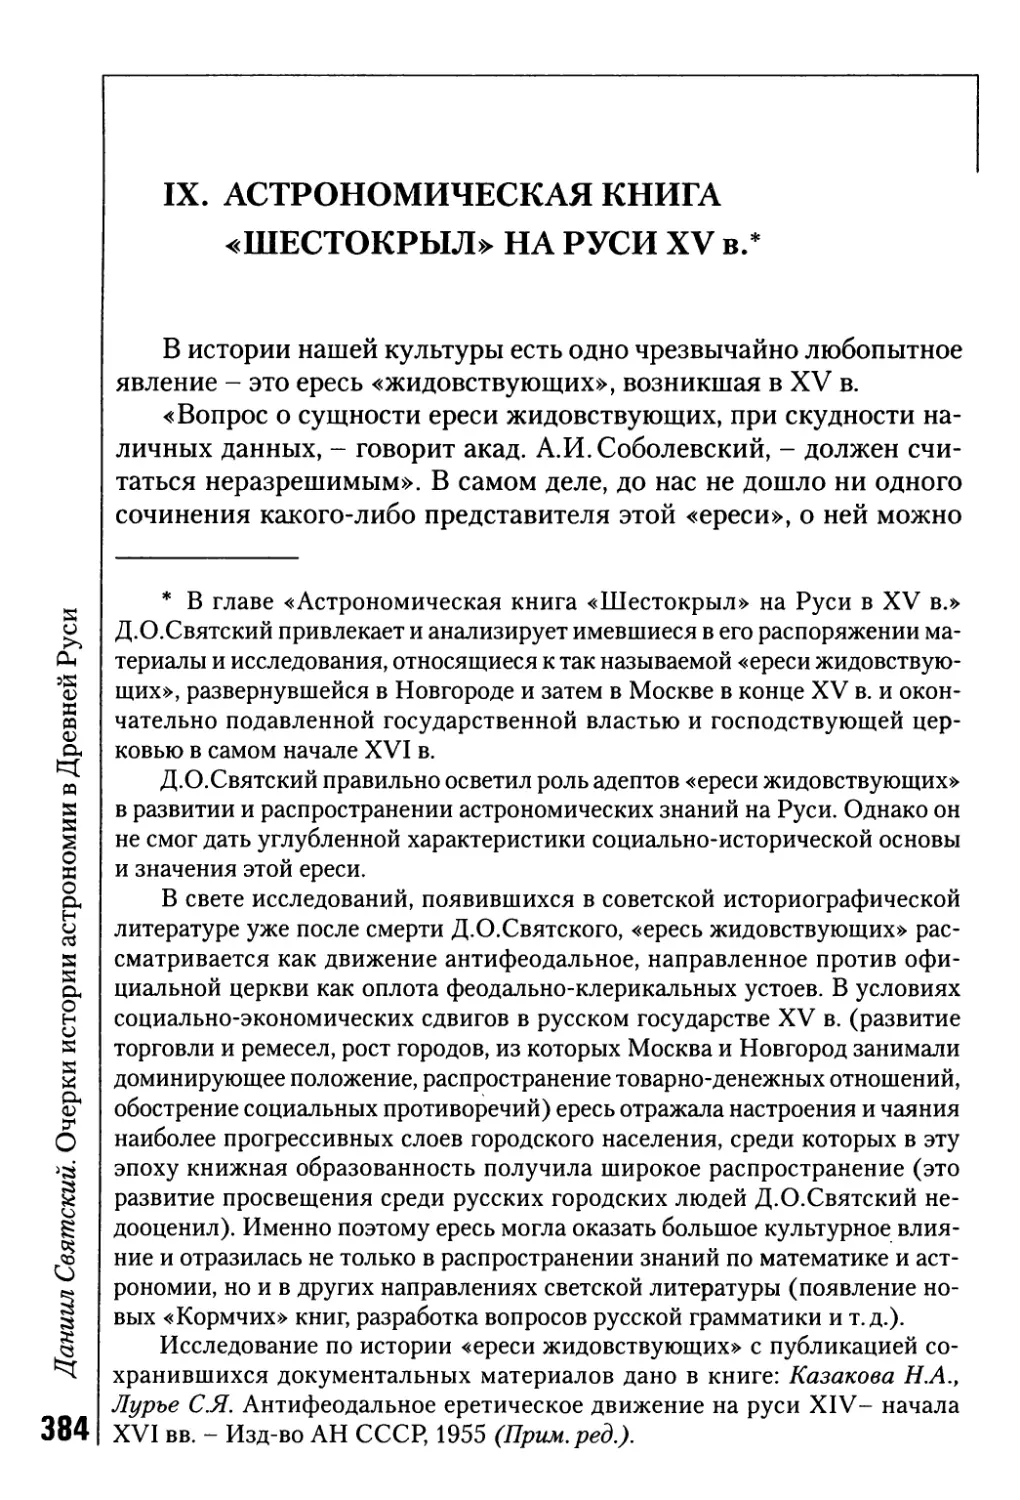 IX. Астрономическая книга «Шестокрыл» на Руси XV в